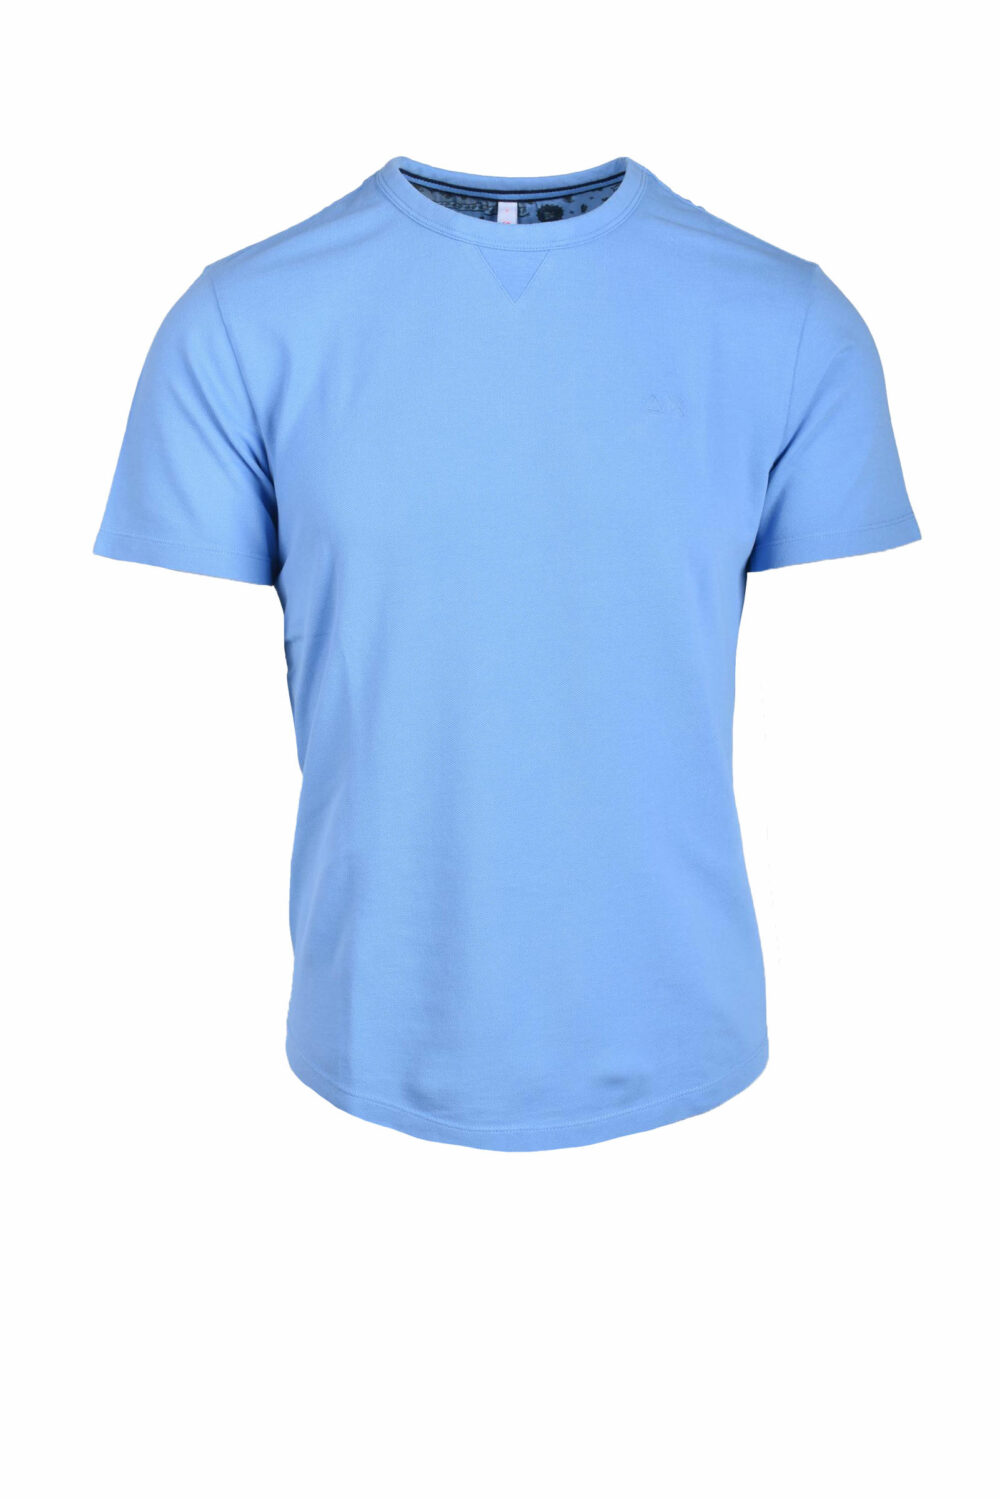 T-shirt SUN68 Azzurro - Foto 1